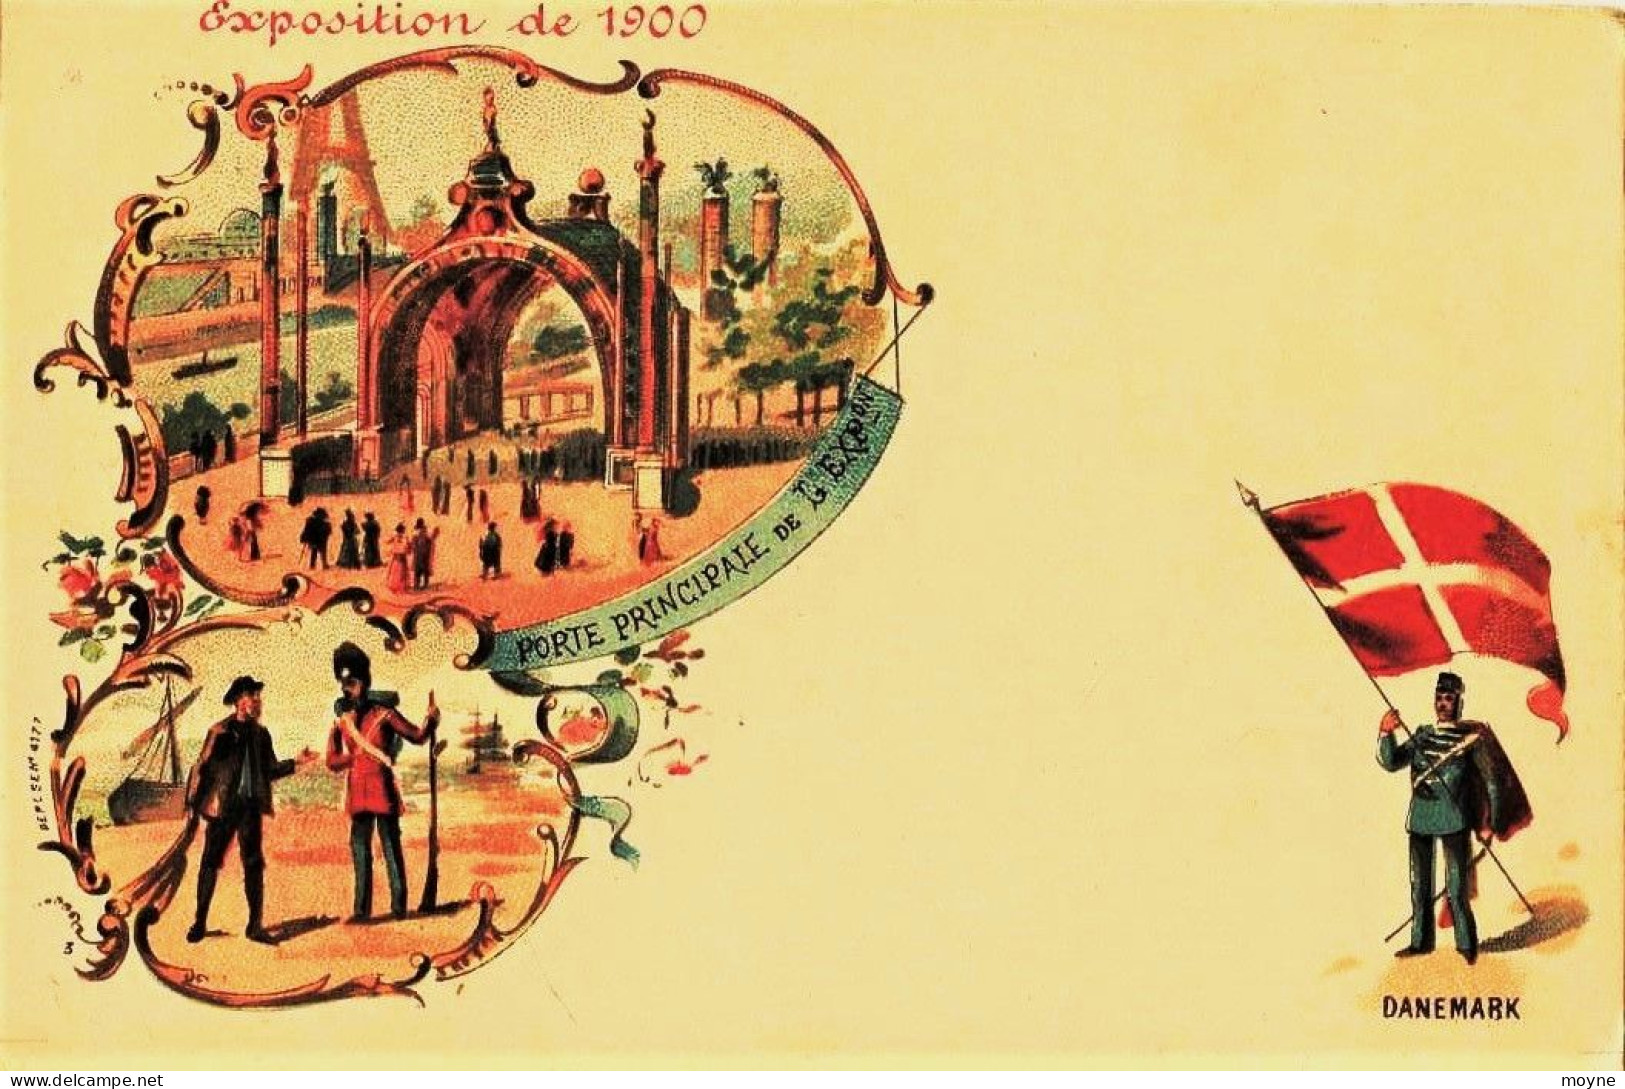 1823 - DANEMARK  -  EXPOSITION 1900 - CHROMO.   PORTE PRINCIPALE -   Illustrateur - Ausstellungen